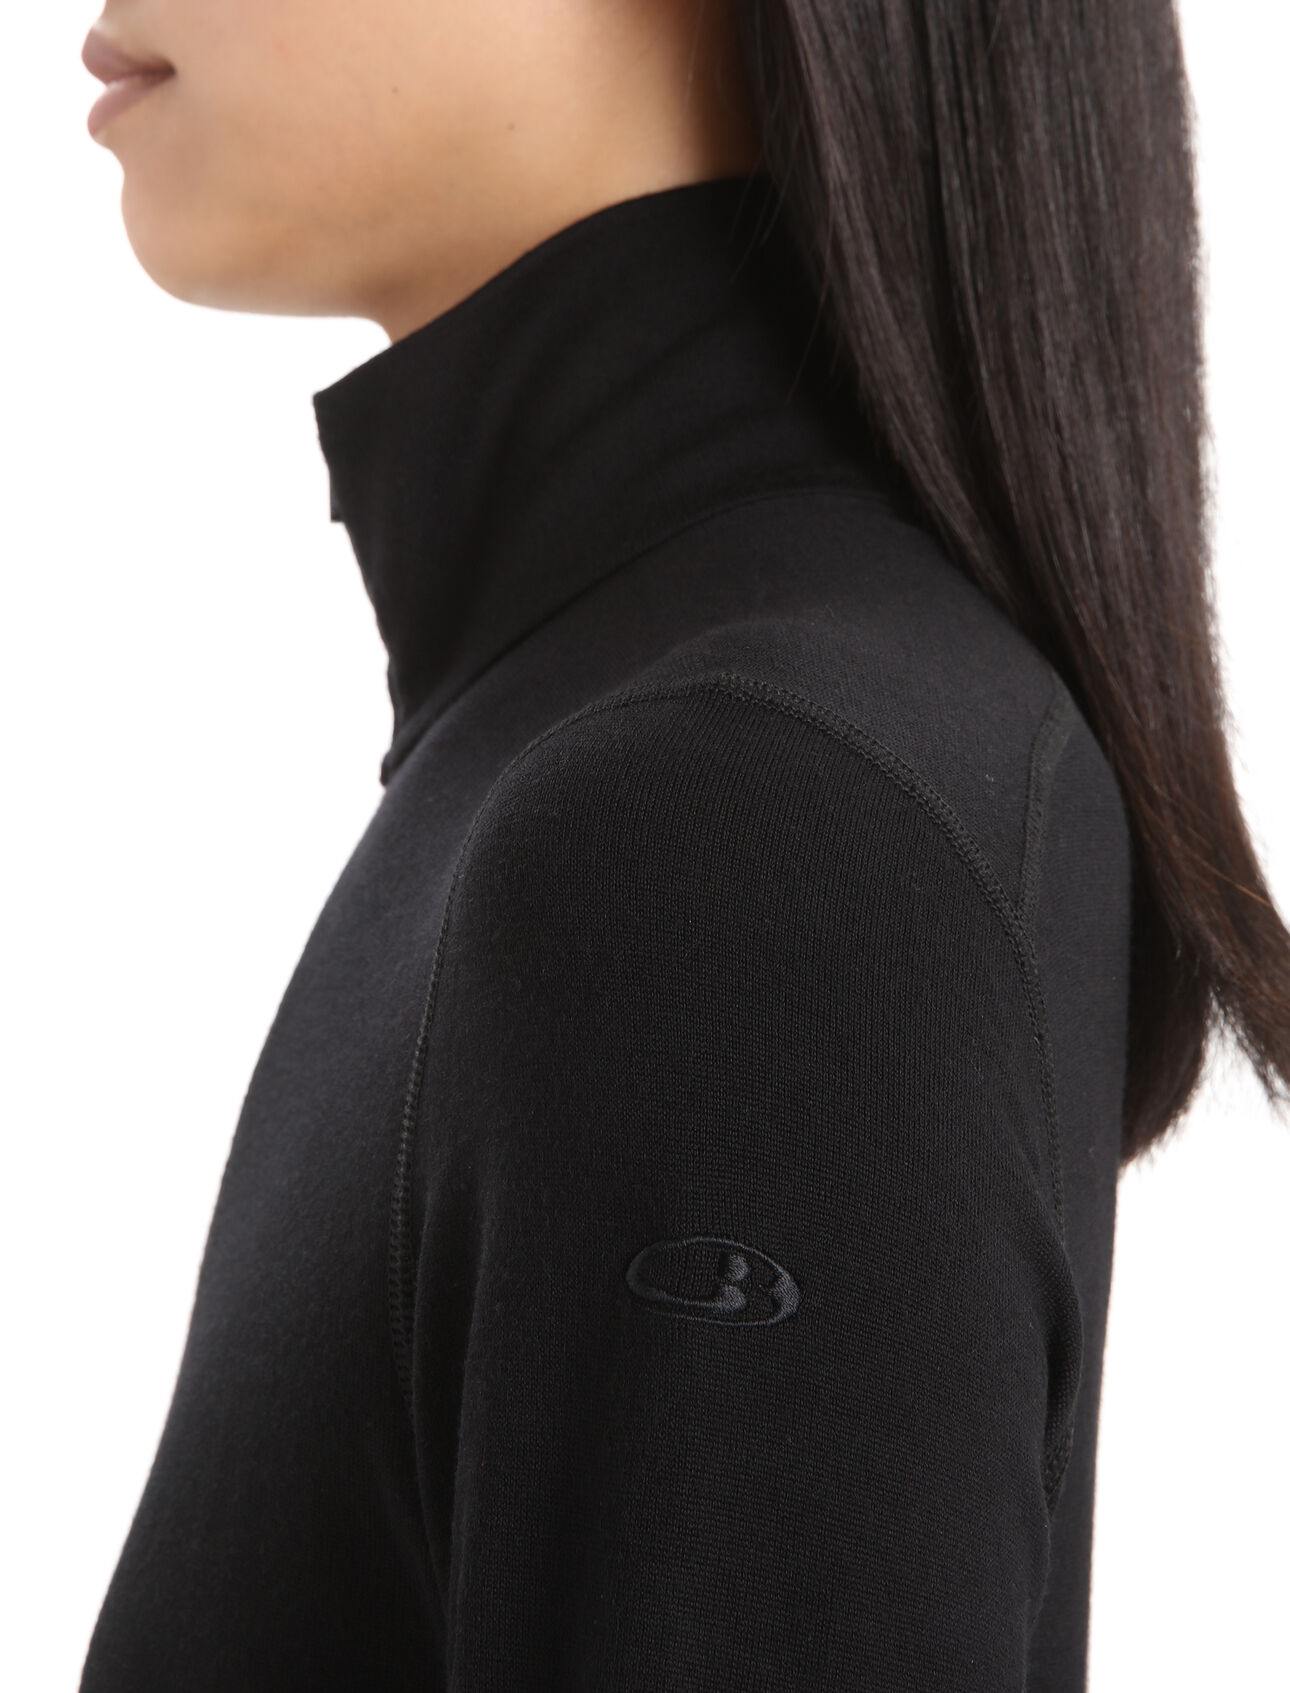 Merino Wool Half Zip Long Sleeve - Black Base Layer 320 – Merino Tech